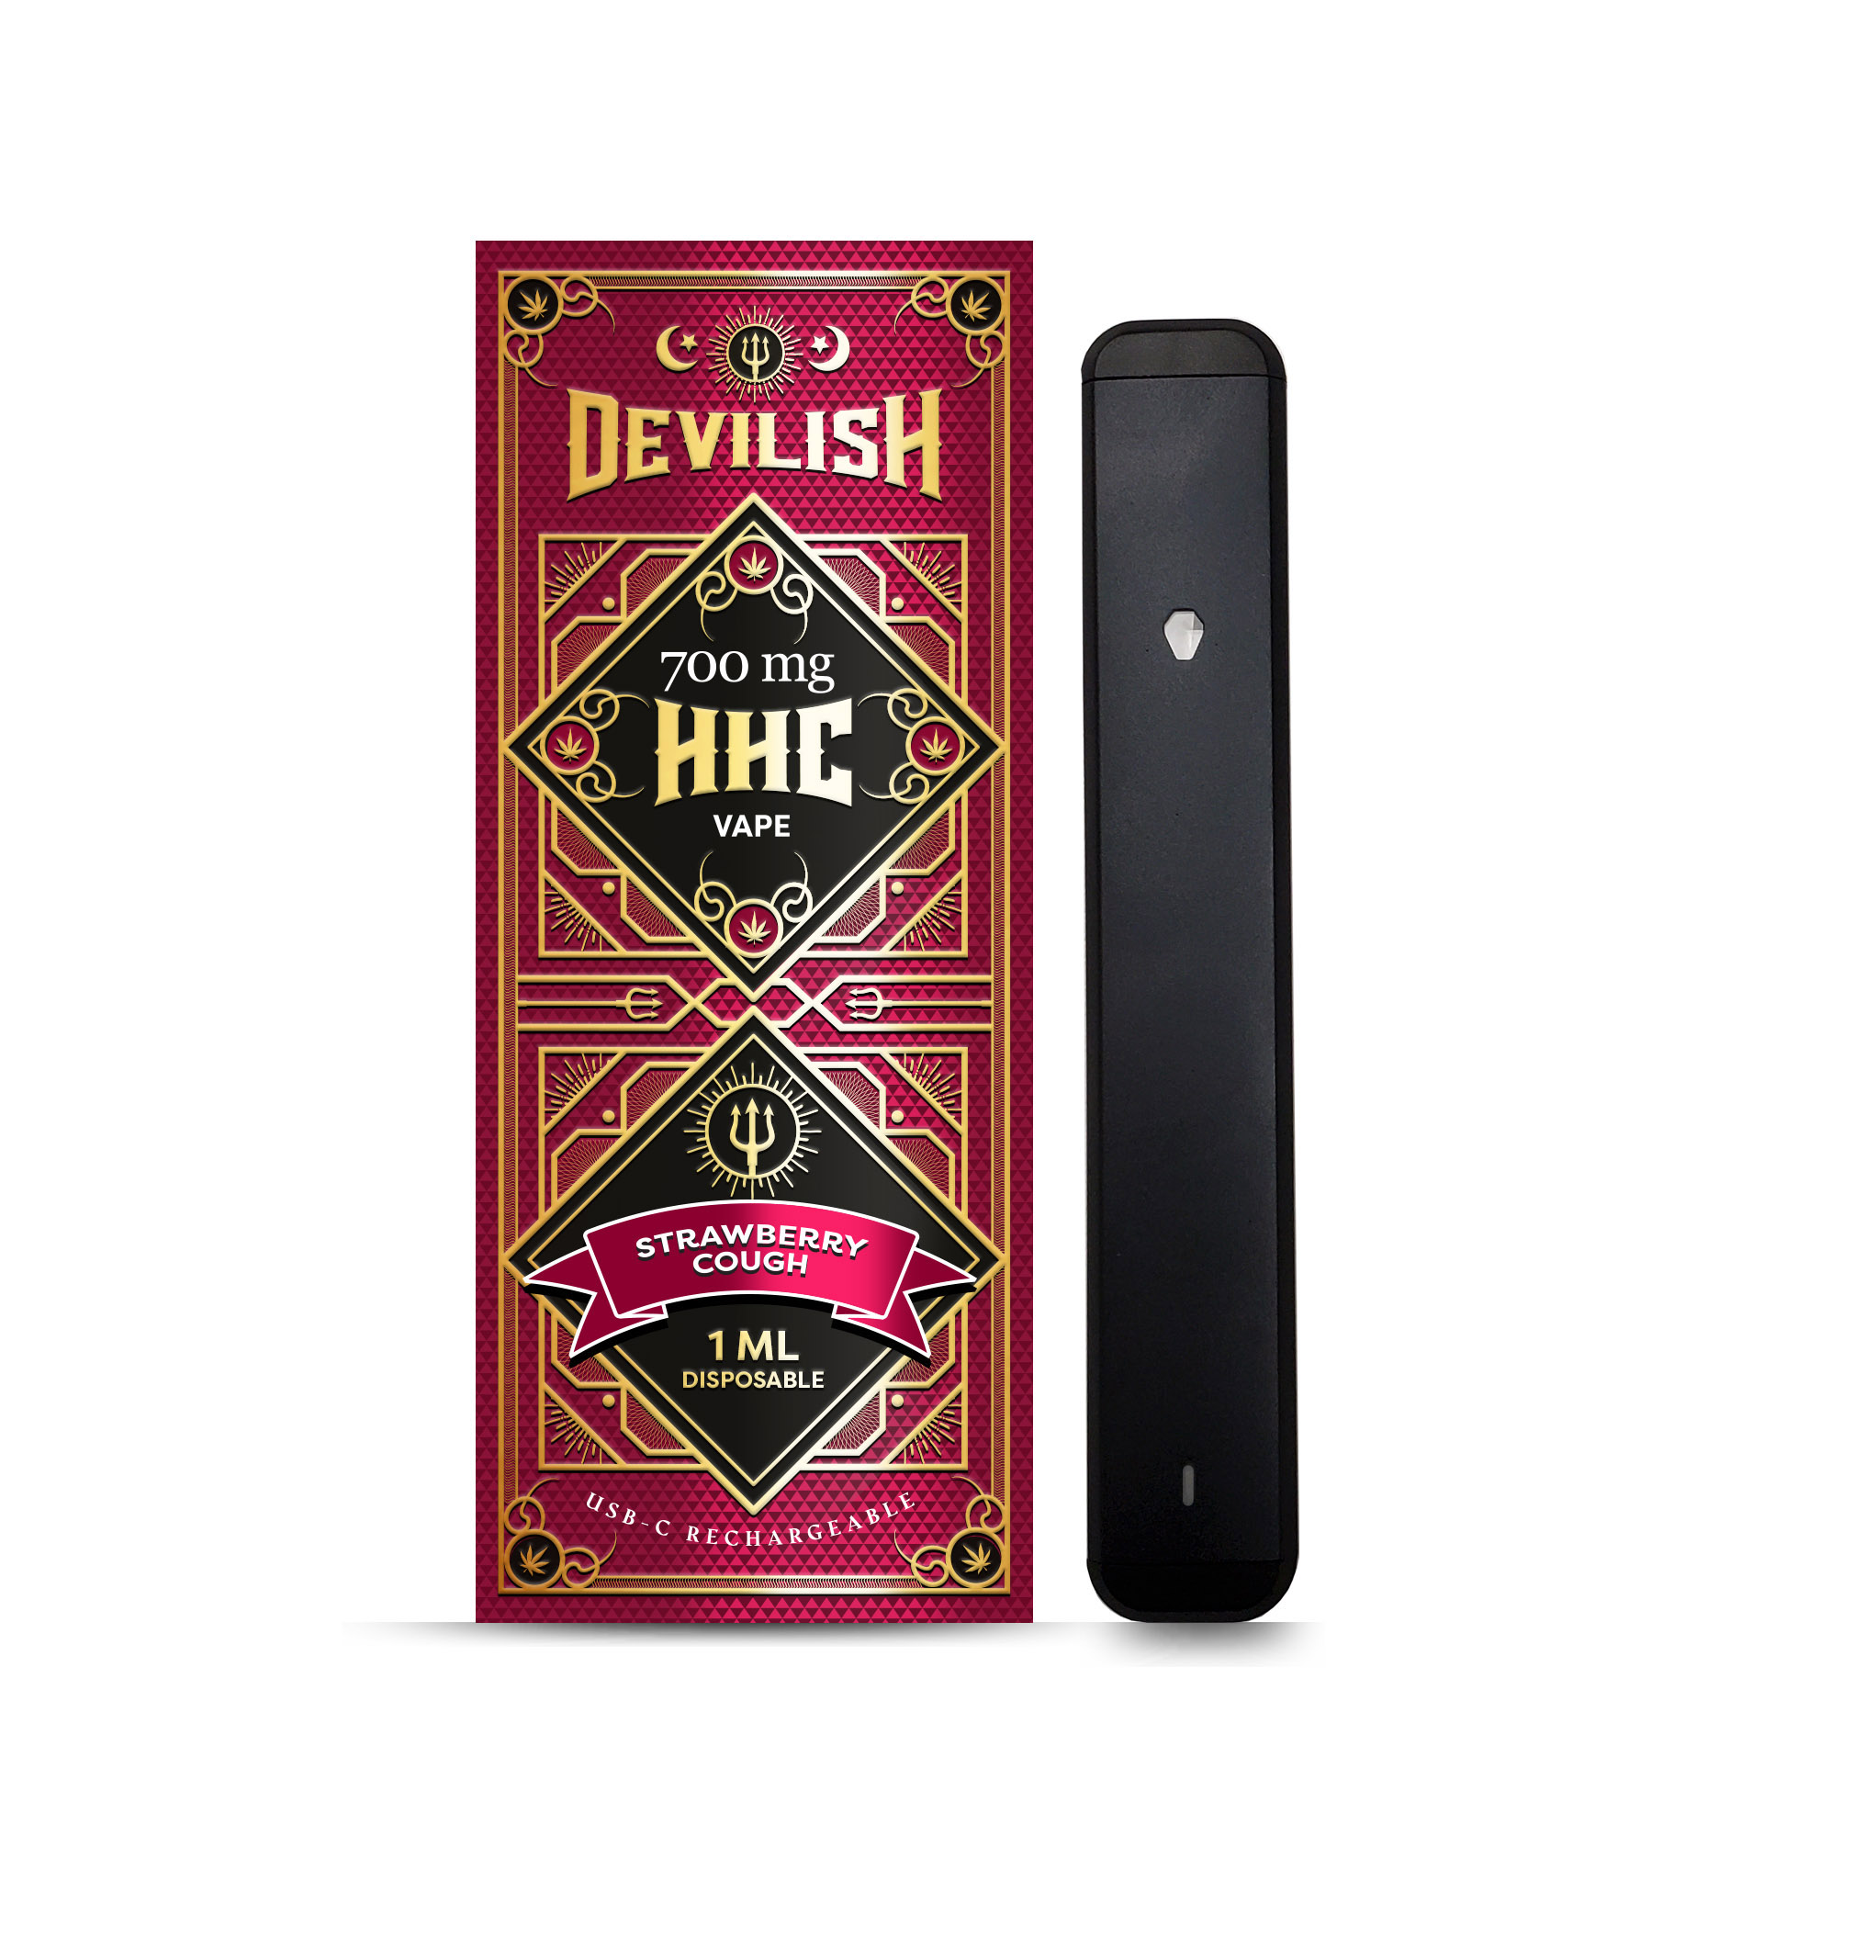 Devilish 700mg HHC Disposable Vape Pen, Strawberry Cough